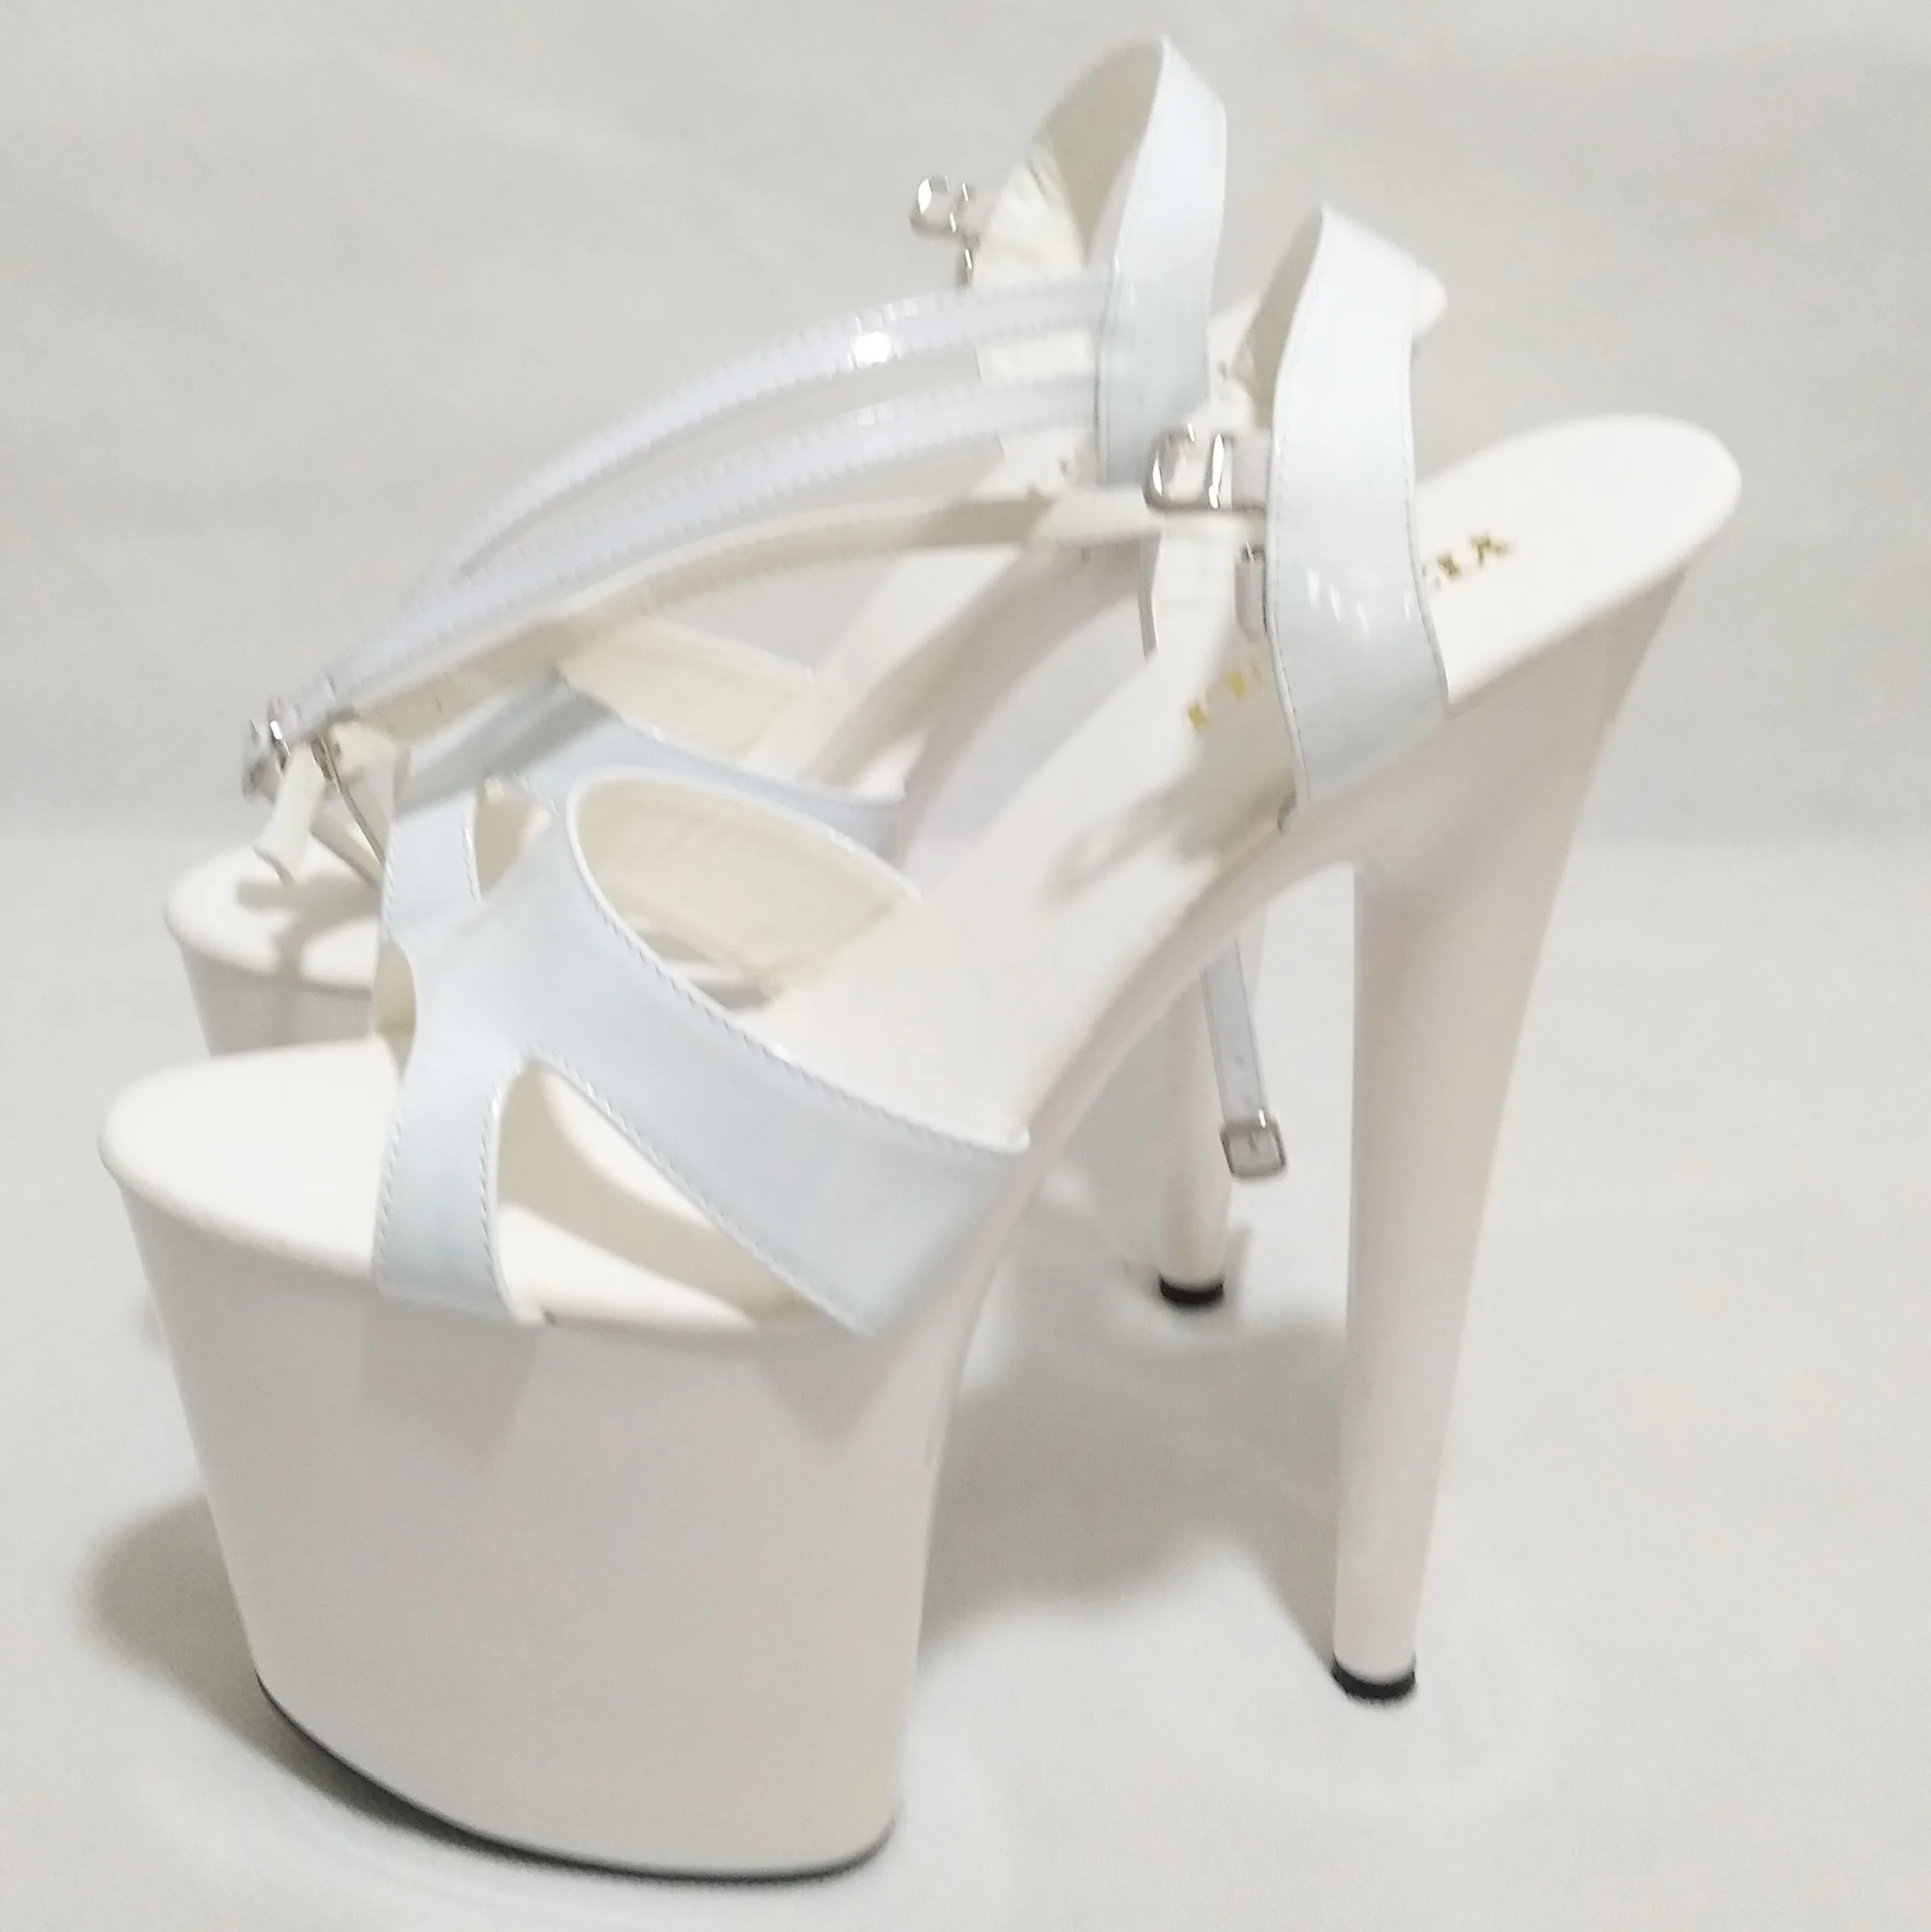 super-high-heels-20cm-temptation-silver-transparent-sandals-8-inches-sexy-ladies-fashion-star-handmade-high-heels-dance-shoes